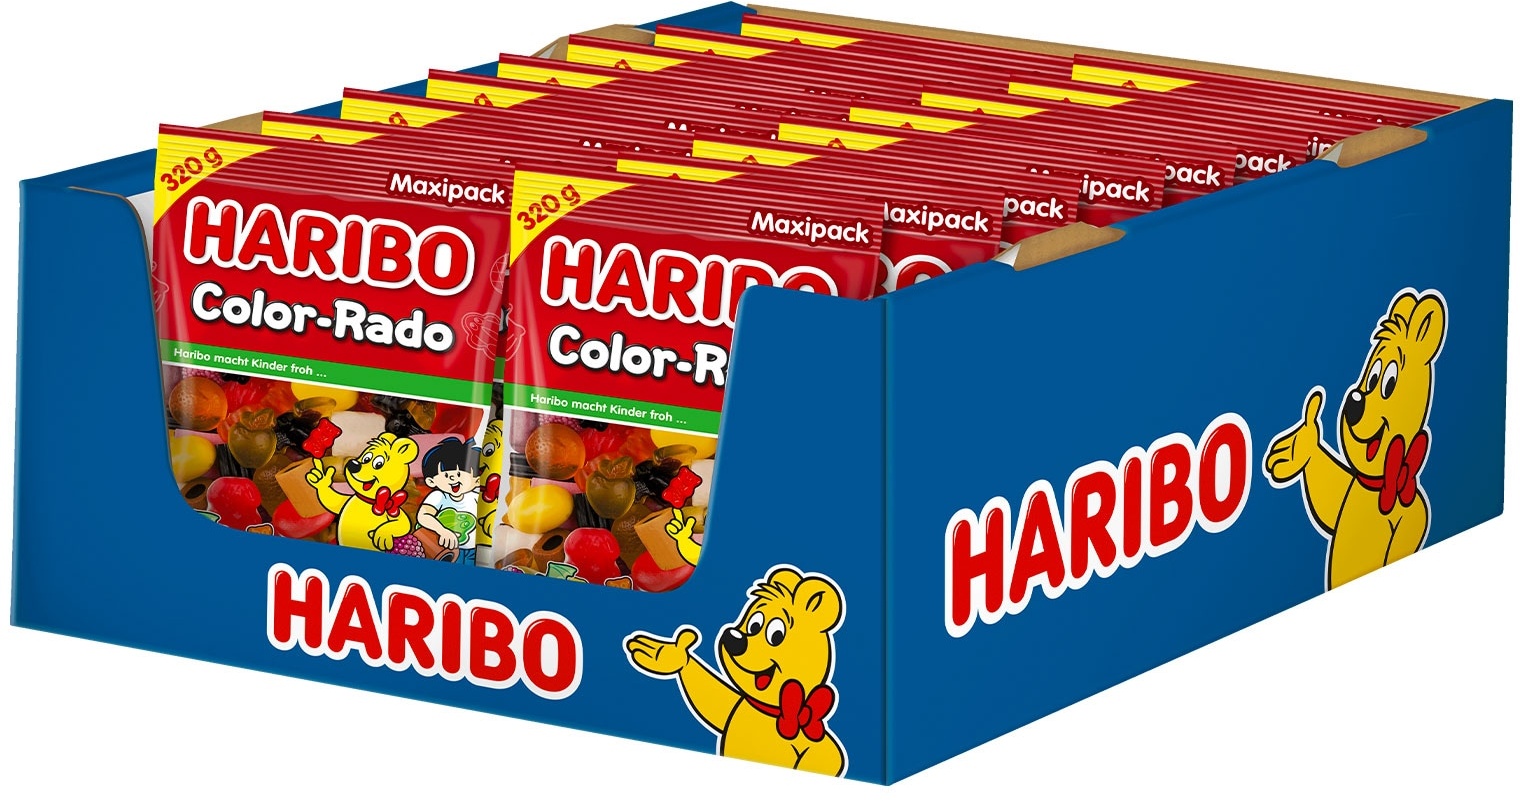 Haribo Fruchtgummi Color-Rado 320 g, 28er Pack